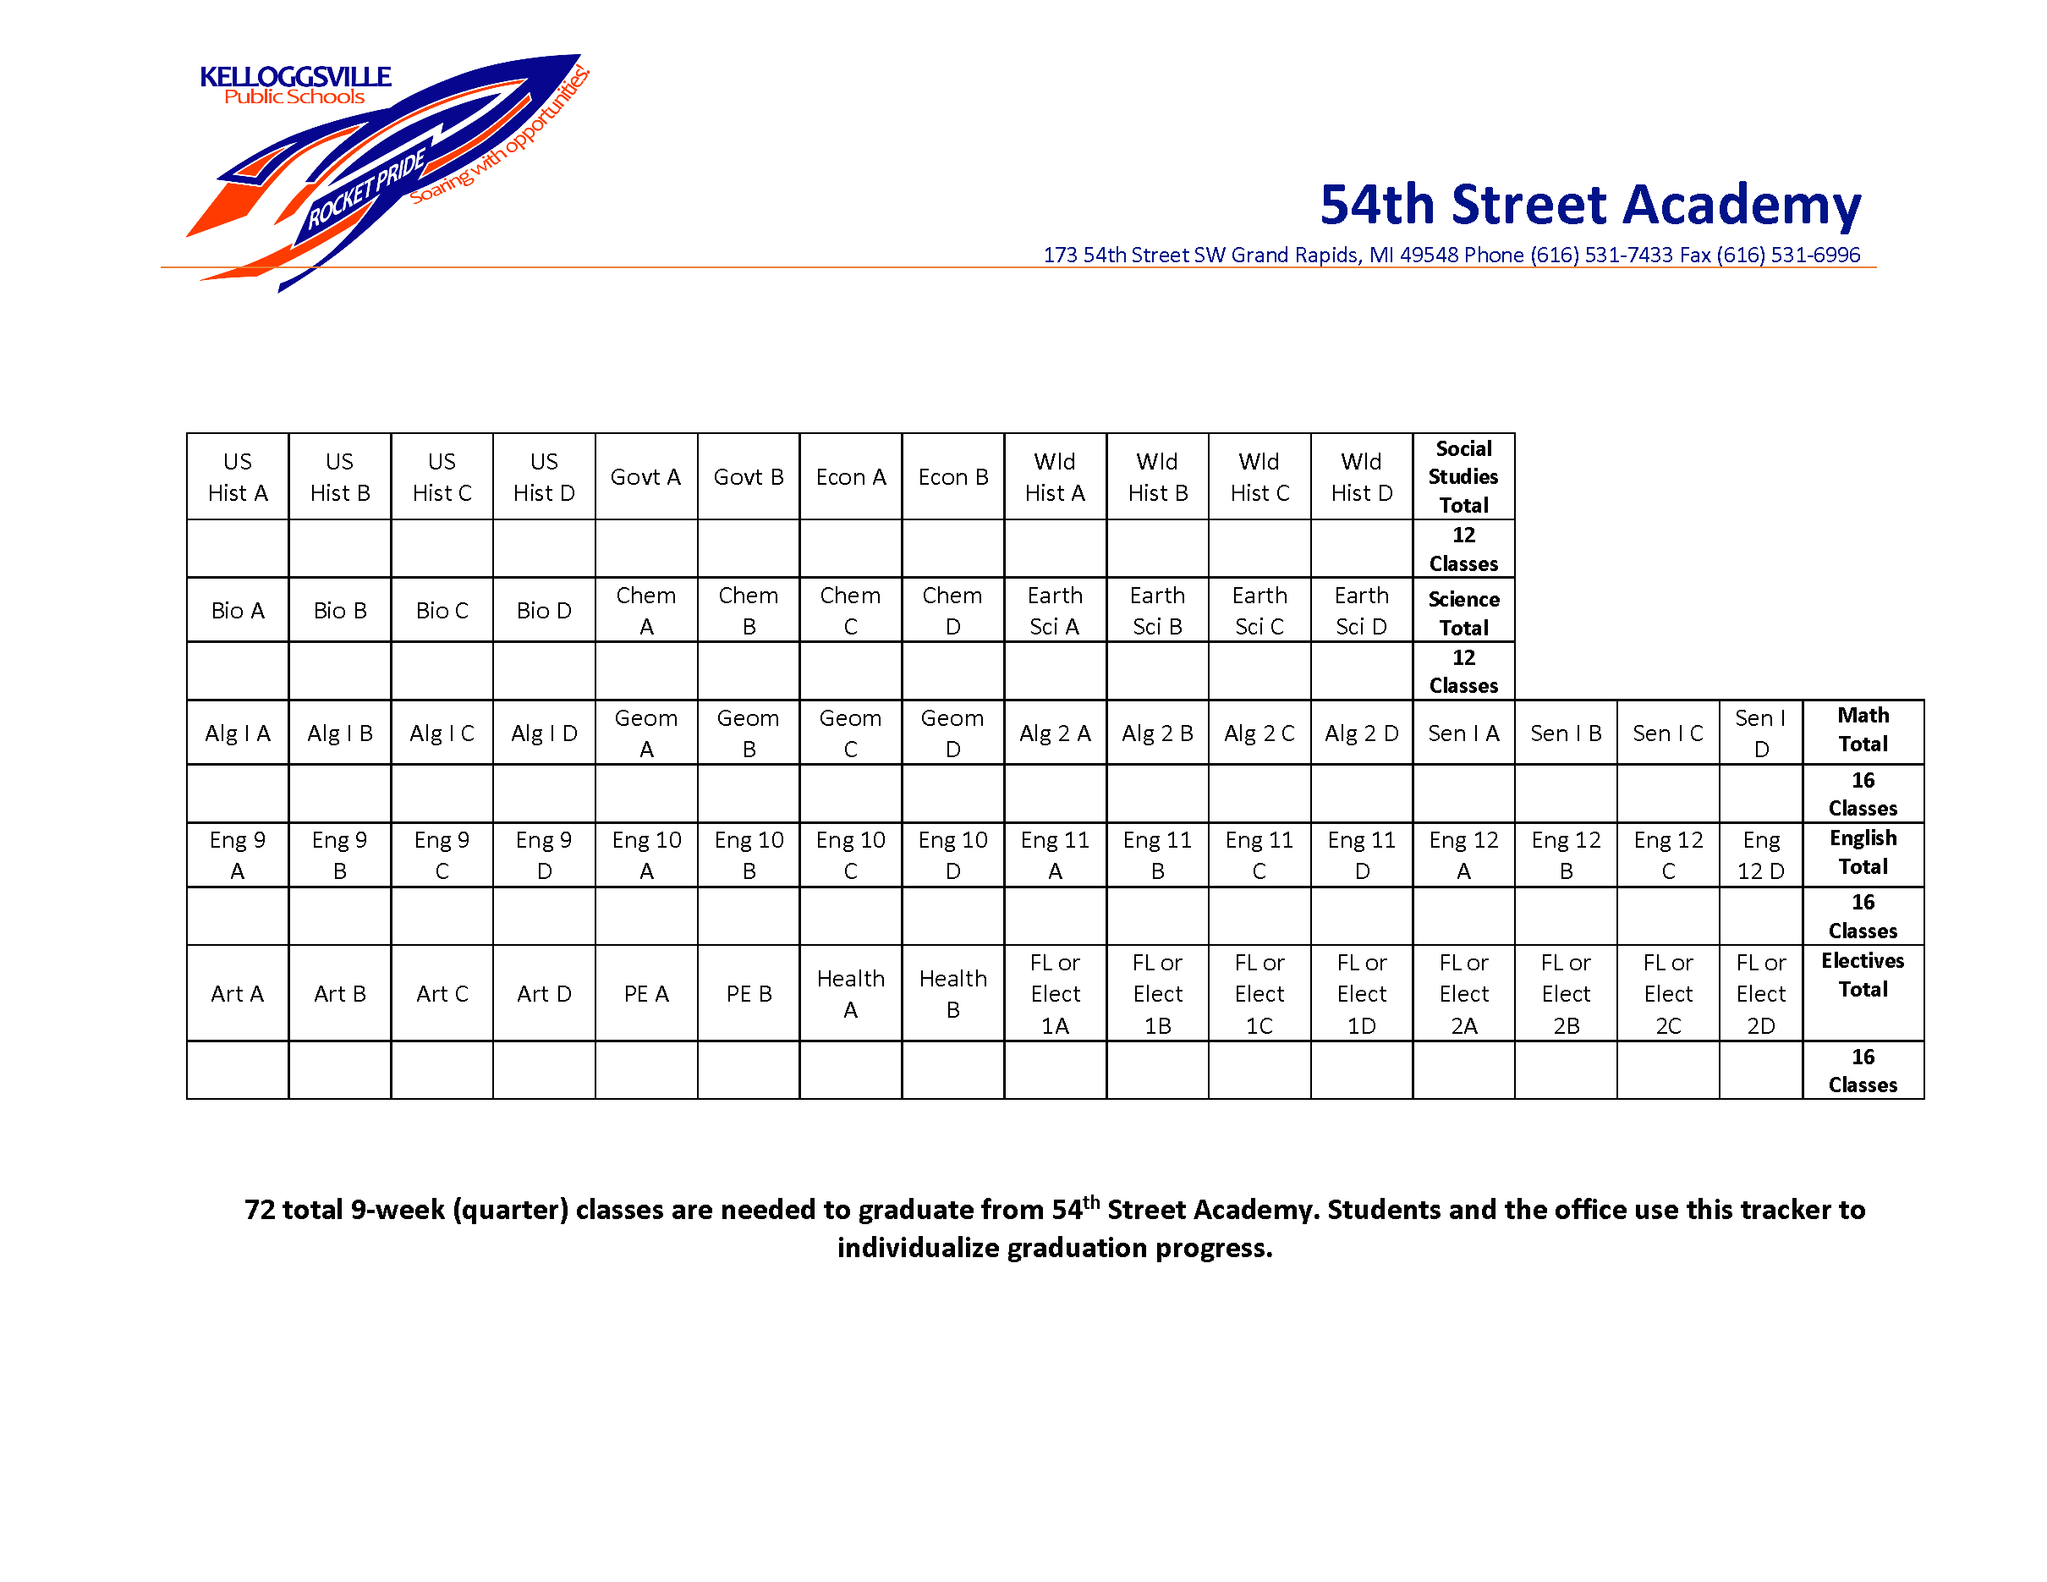 54th Street Academy Credit Audit